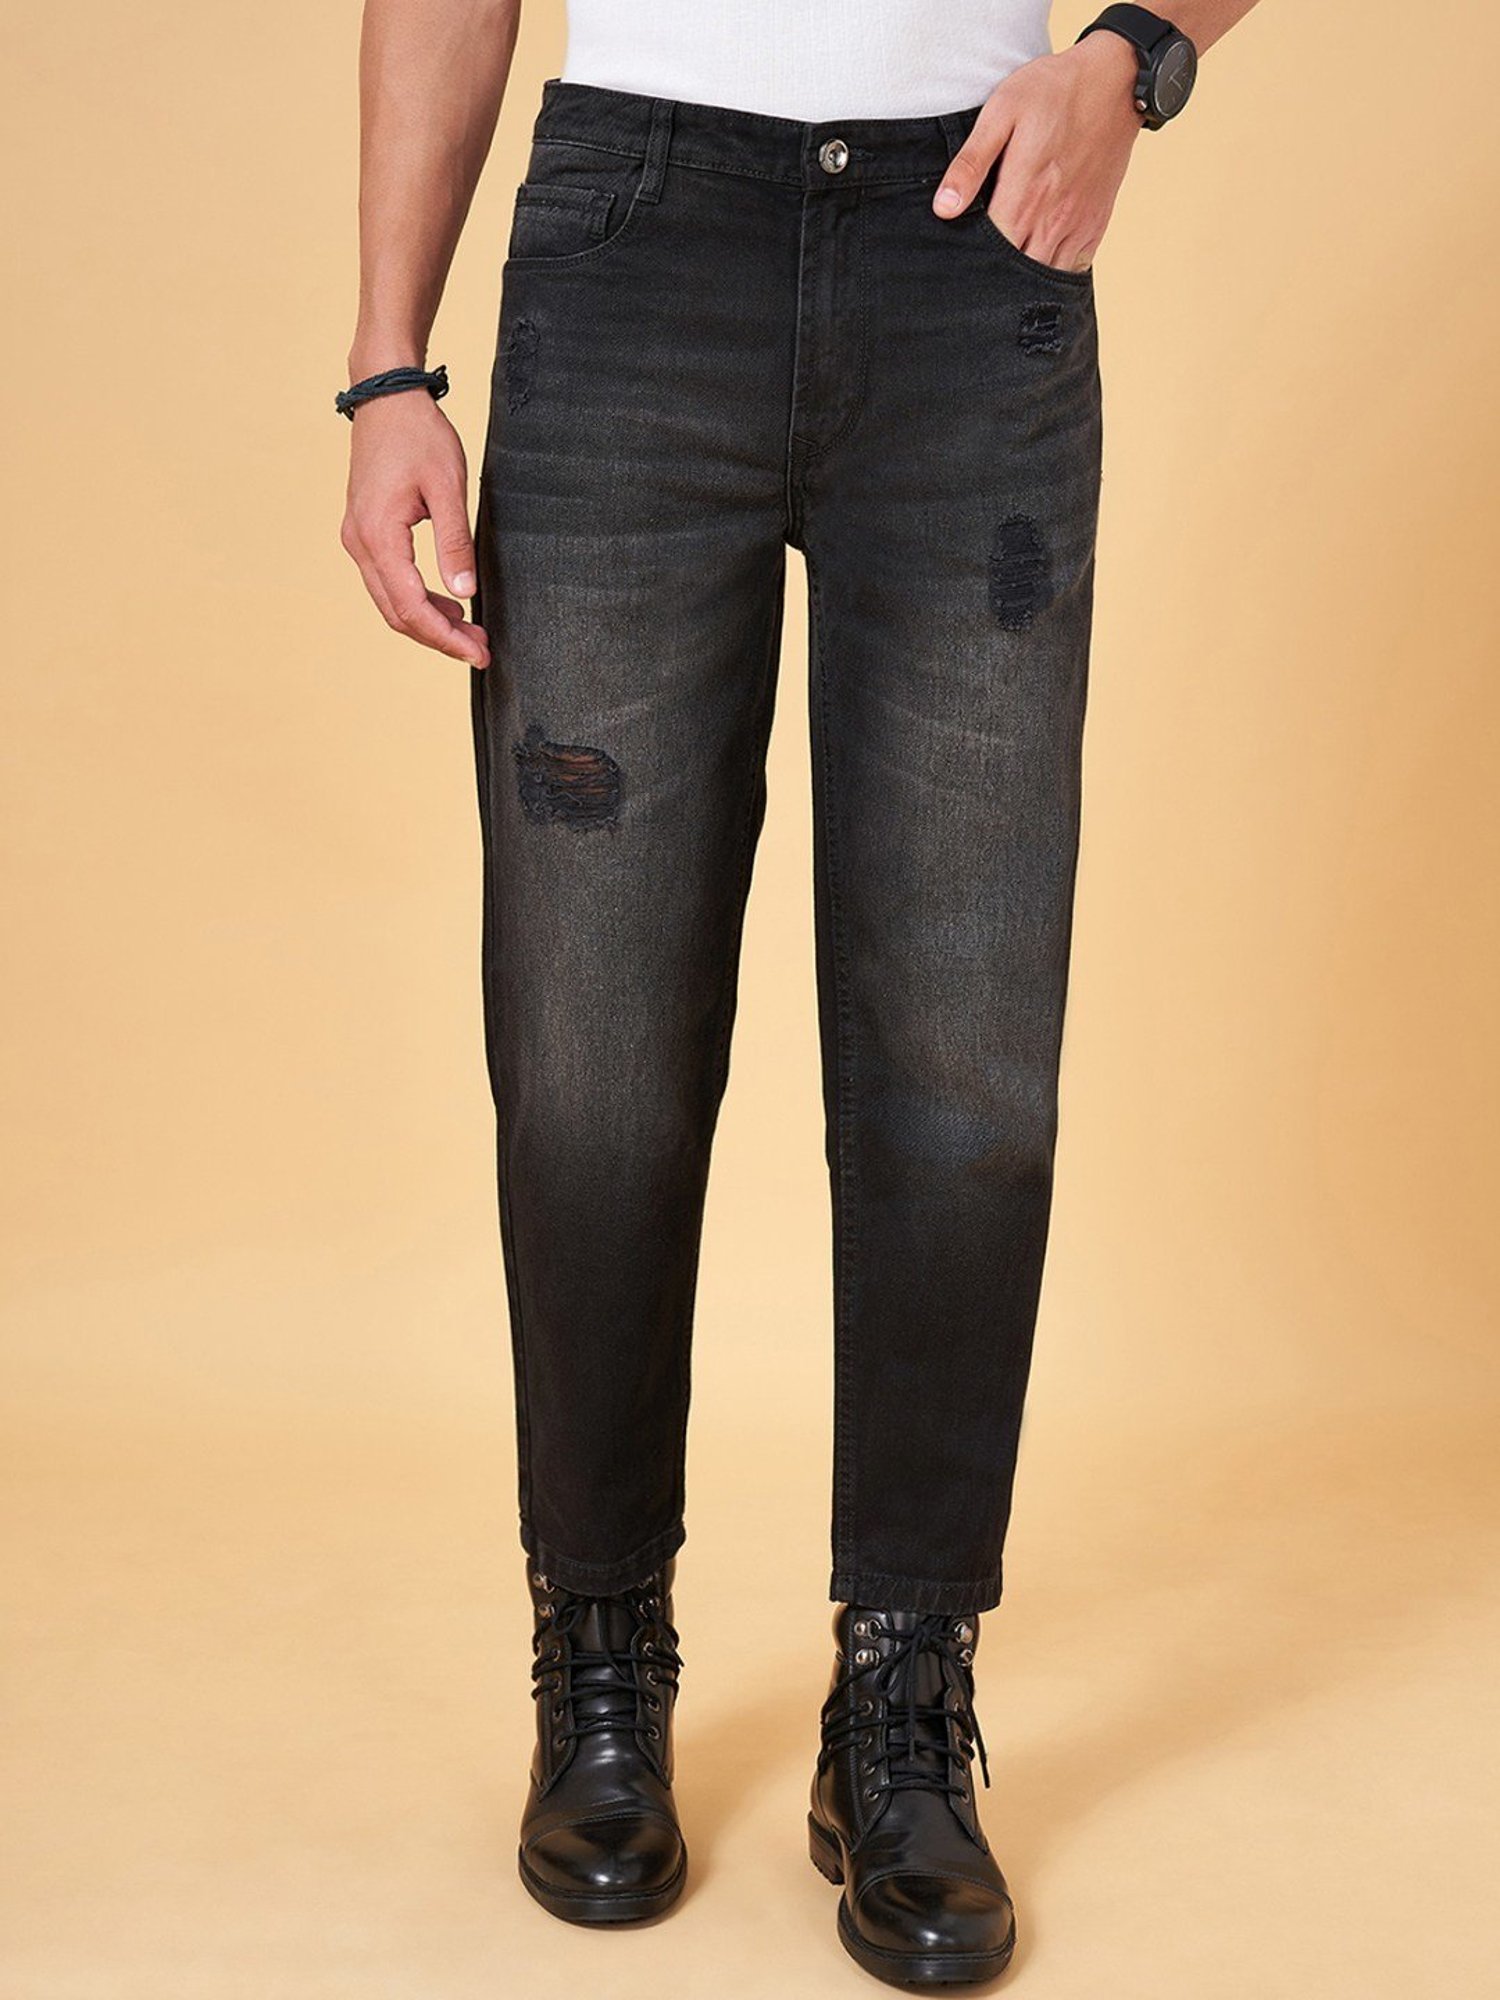 Lars Amadeus Men's Western Ripped Jean Slim Fit Distressed Skinny Denim  Jeans Pants - Walmart.com